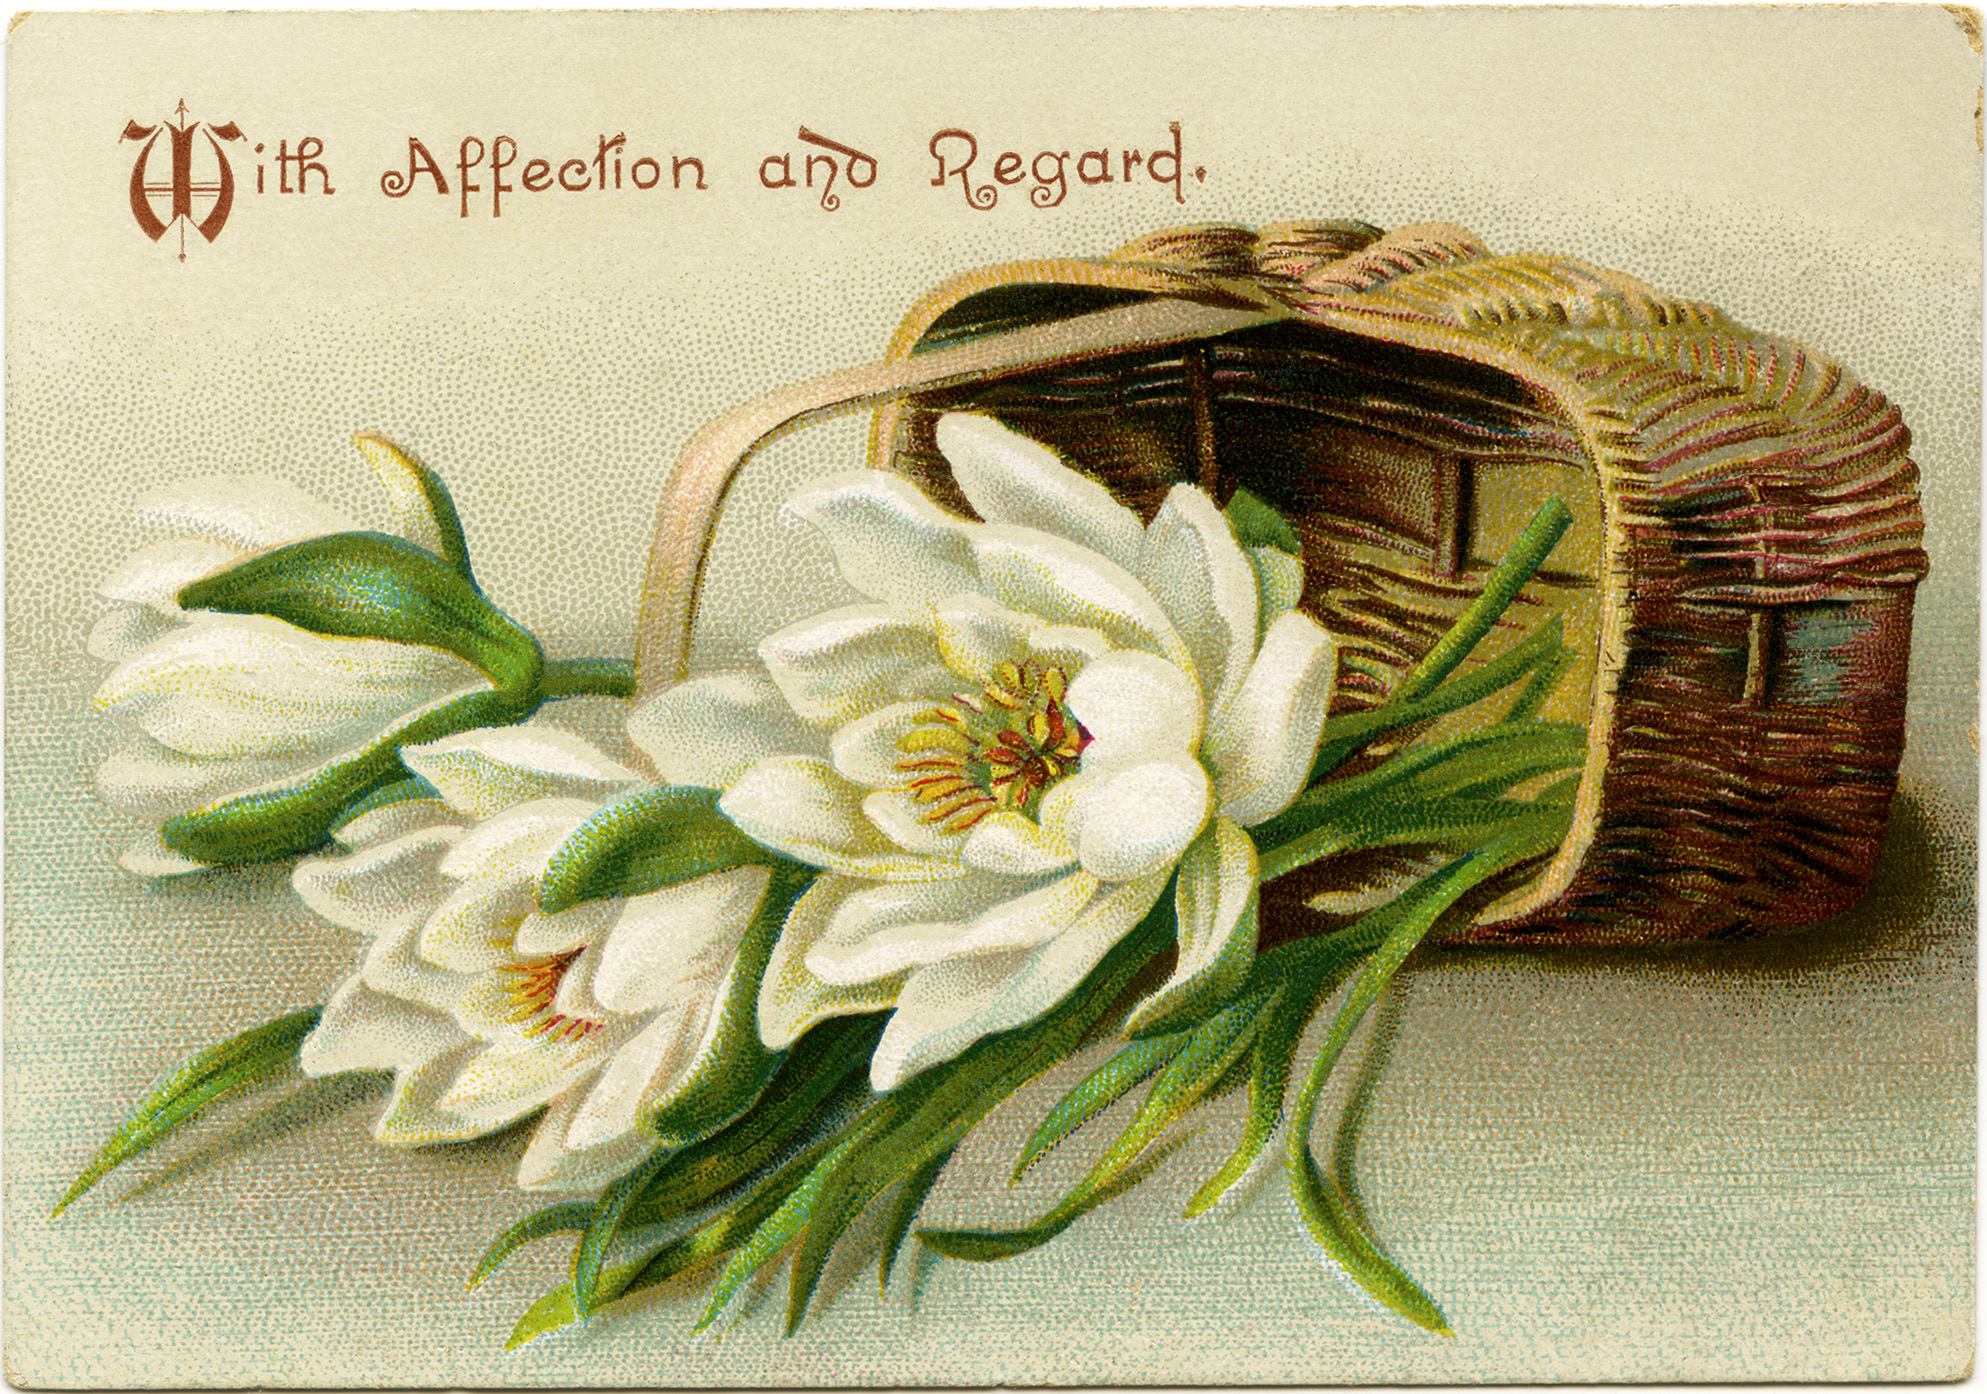 Victorian flower card, vintage flower clip art, white flowers in basket, antique floral illustration, old fashioned card